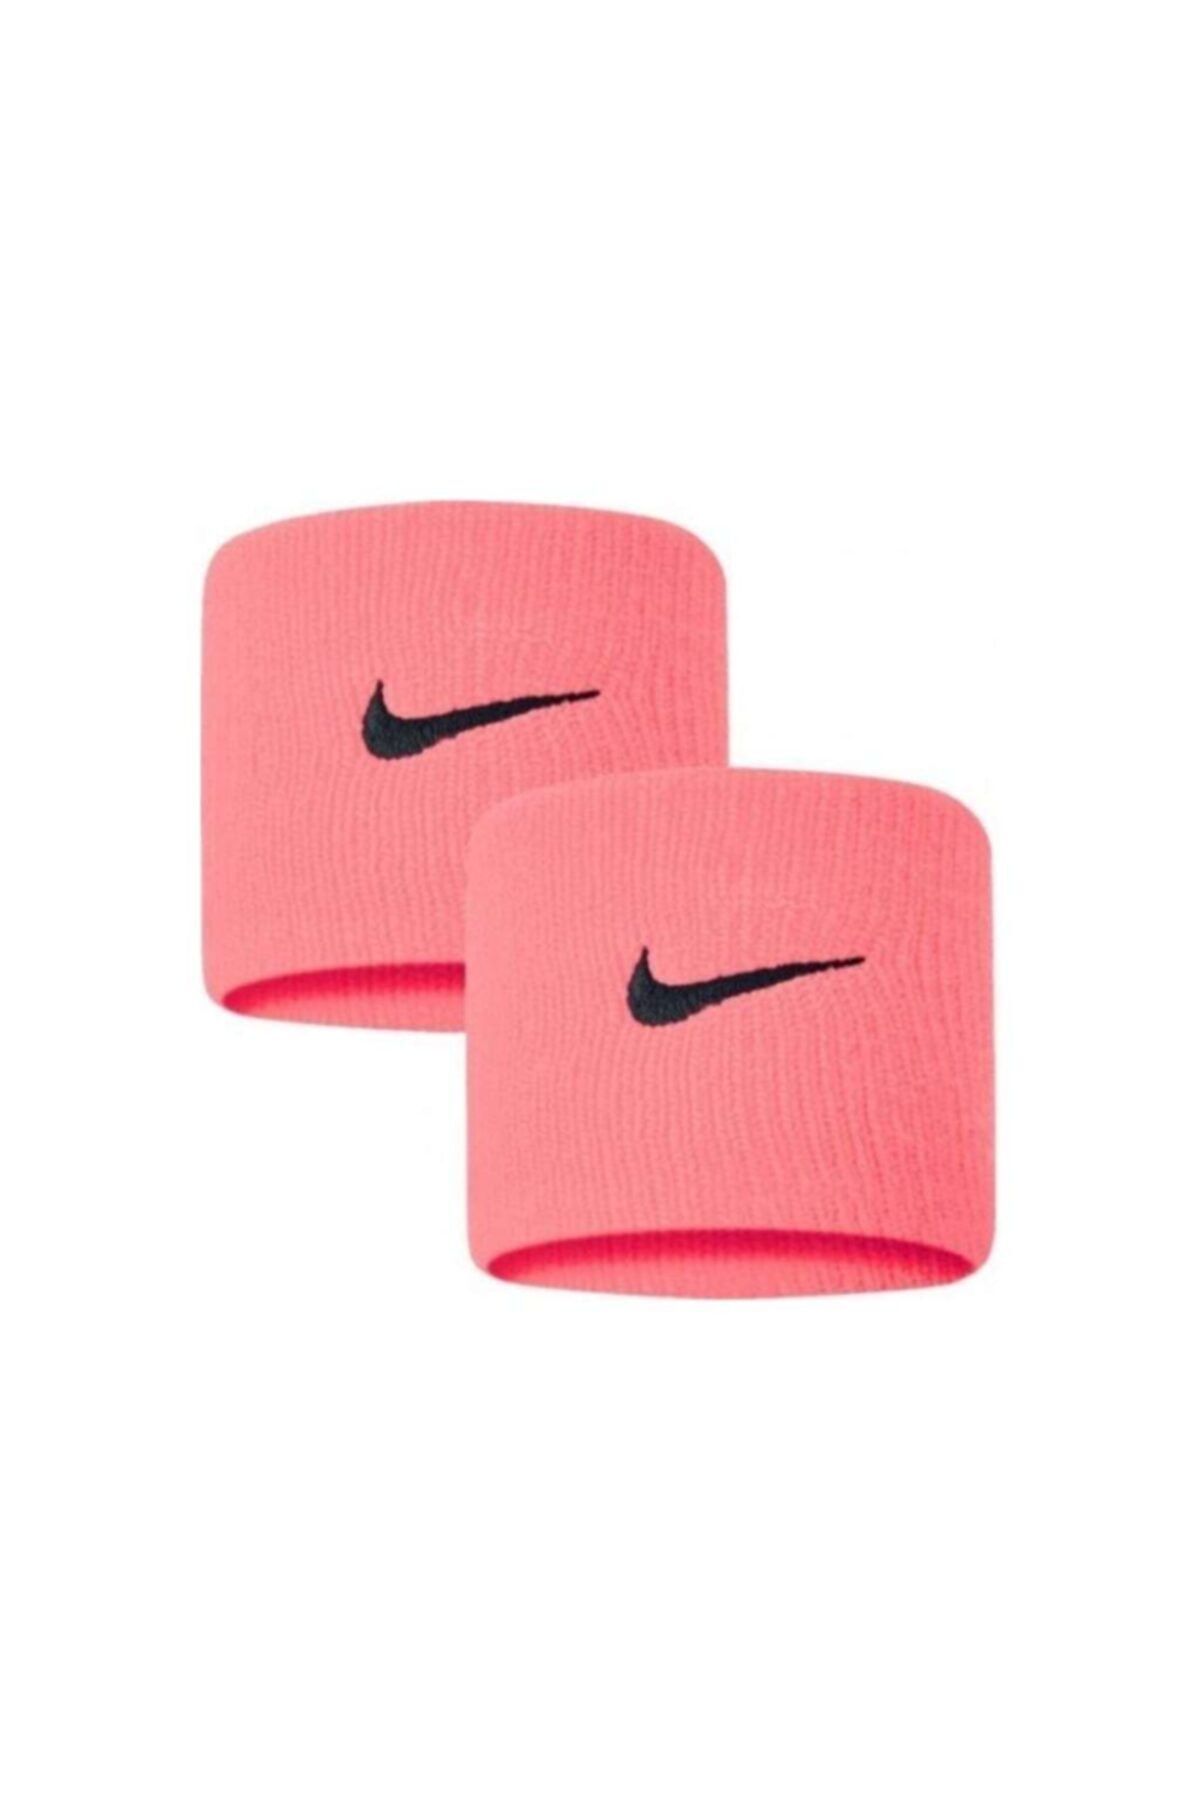 Nike Unisex Mercan Renk Havlu Bileklik  N.000.1565.677.os